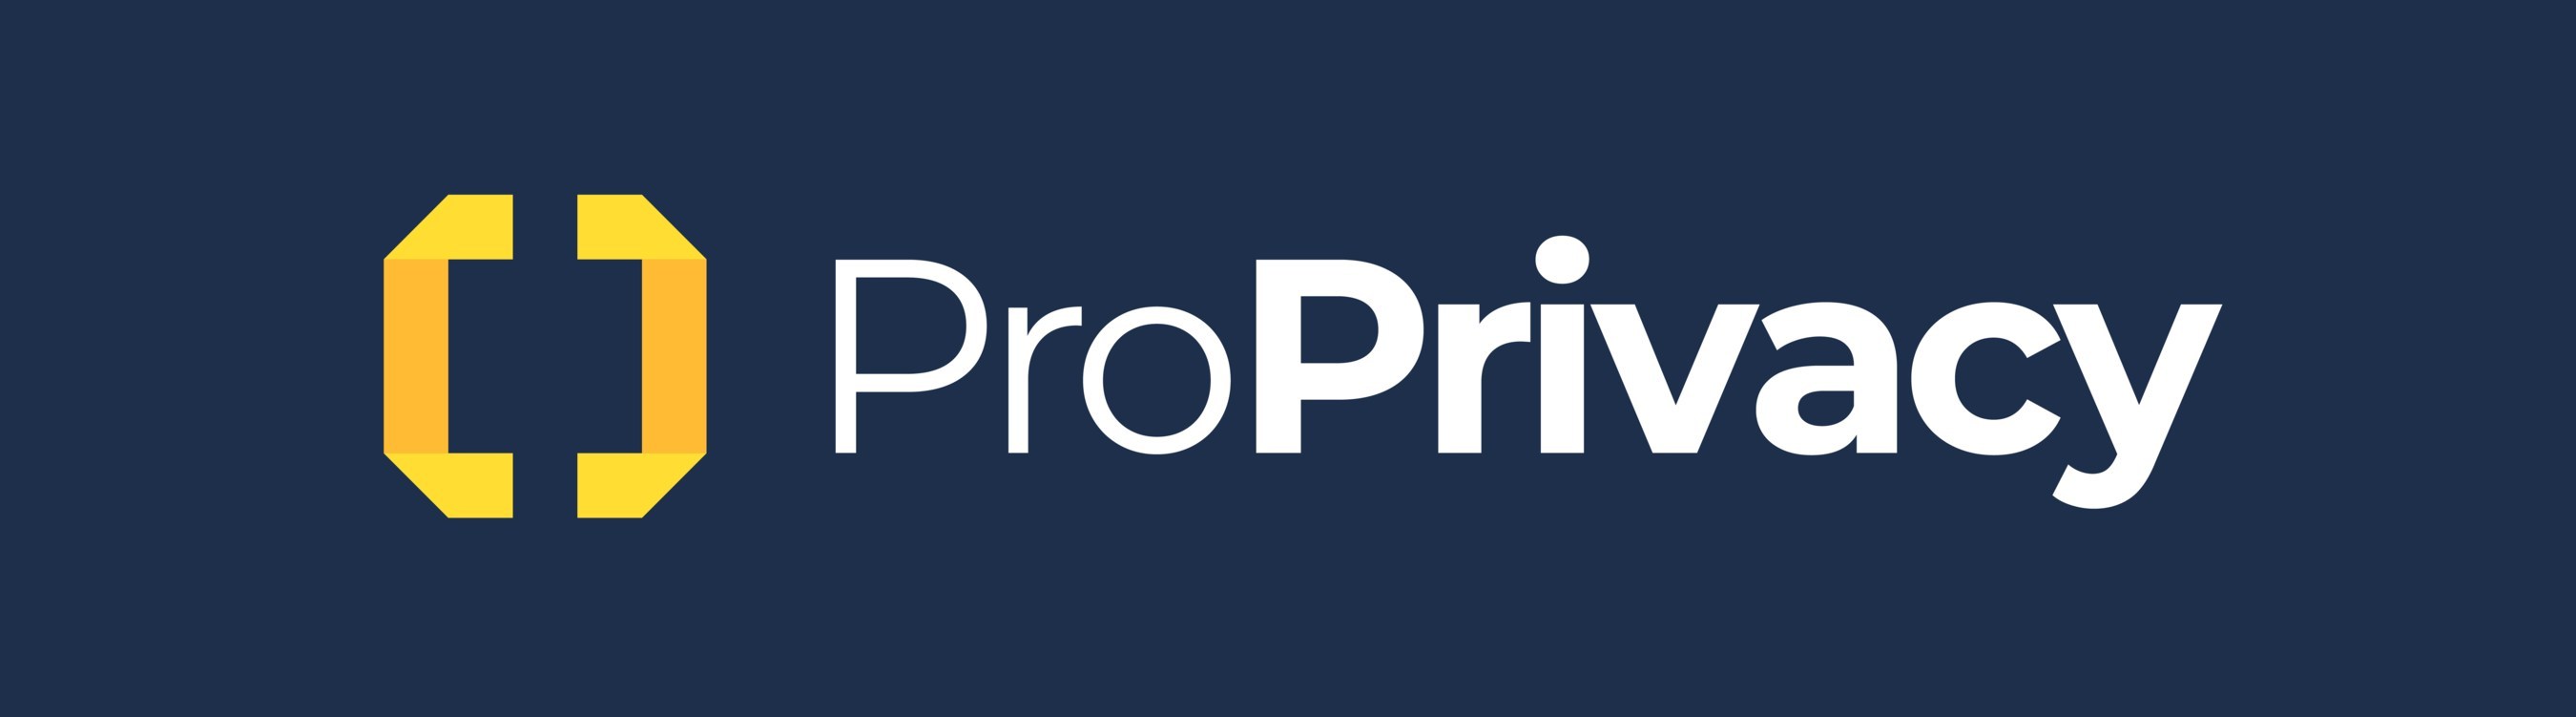 proprivacy-logo